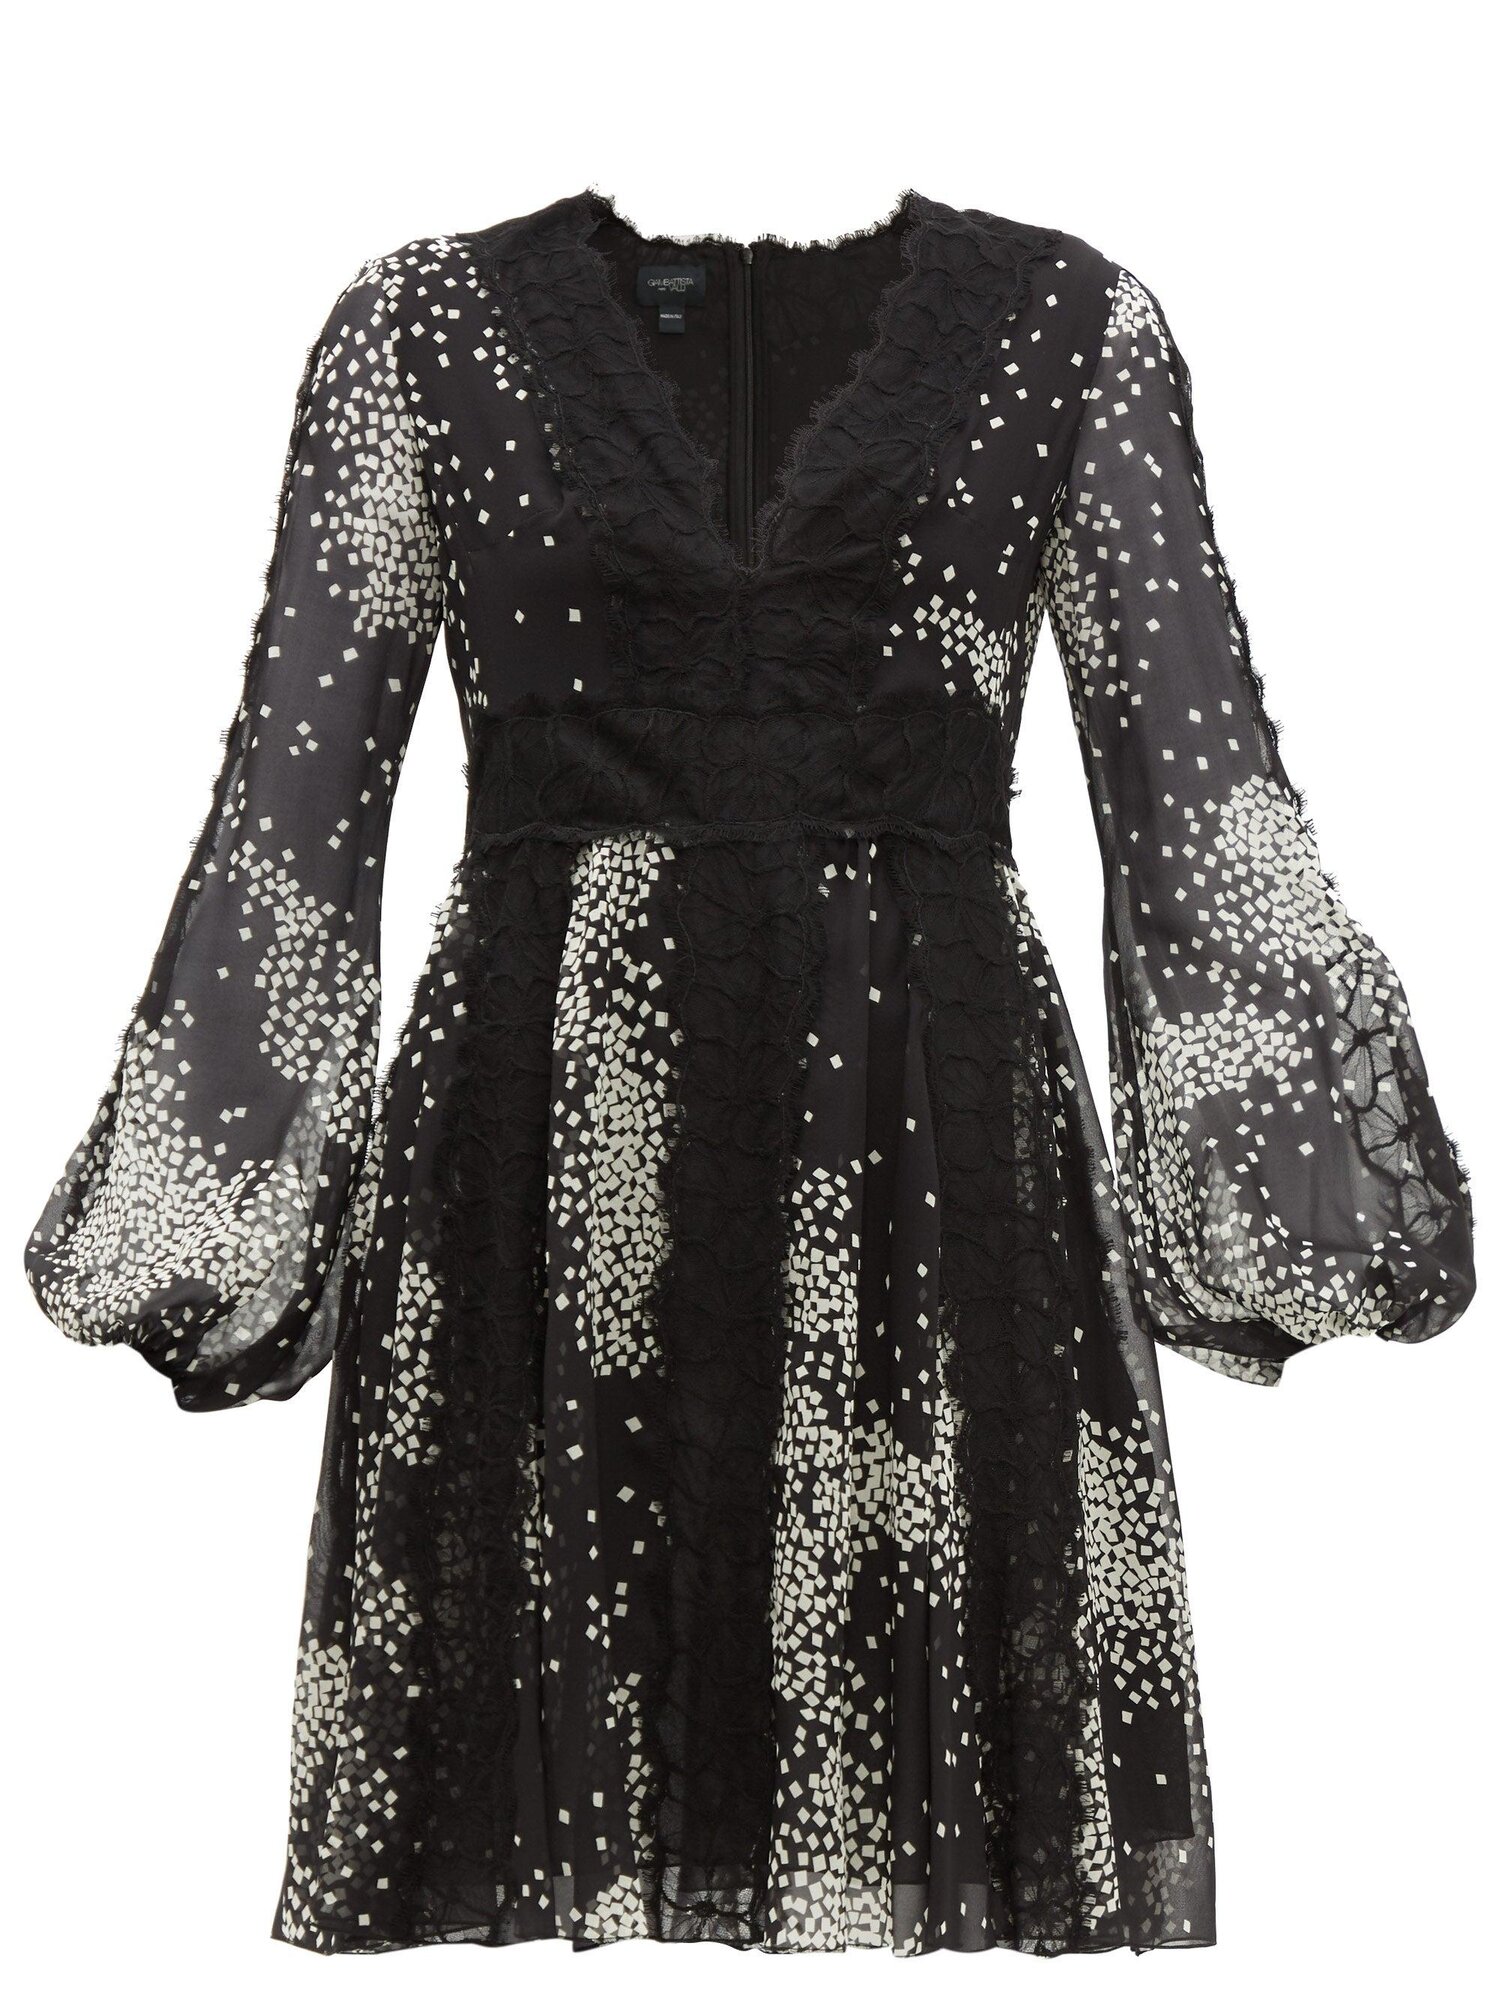 Giambattista Valli Square-Print Lace-Trim Silk-Georgette Dress in Black ...